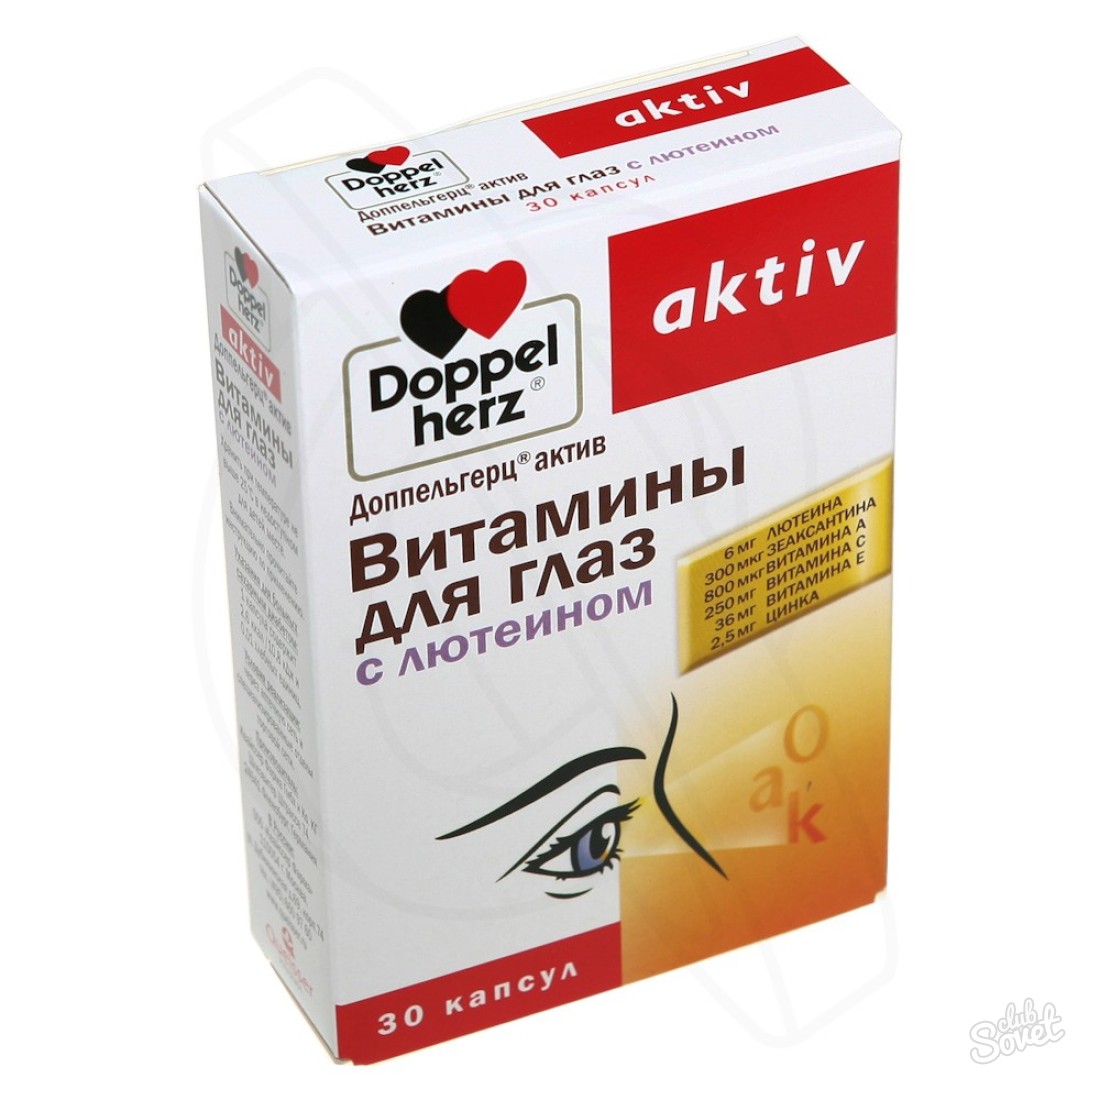 Doppeoplez Vitaminas para Eye: Instruções de uso